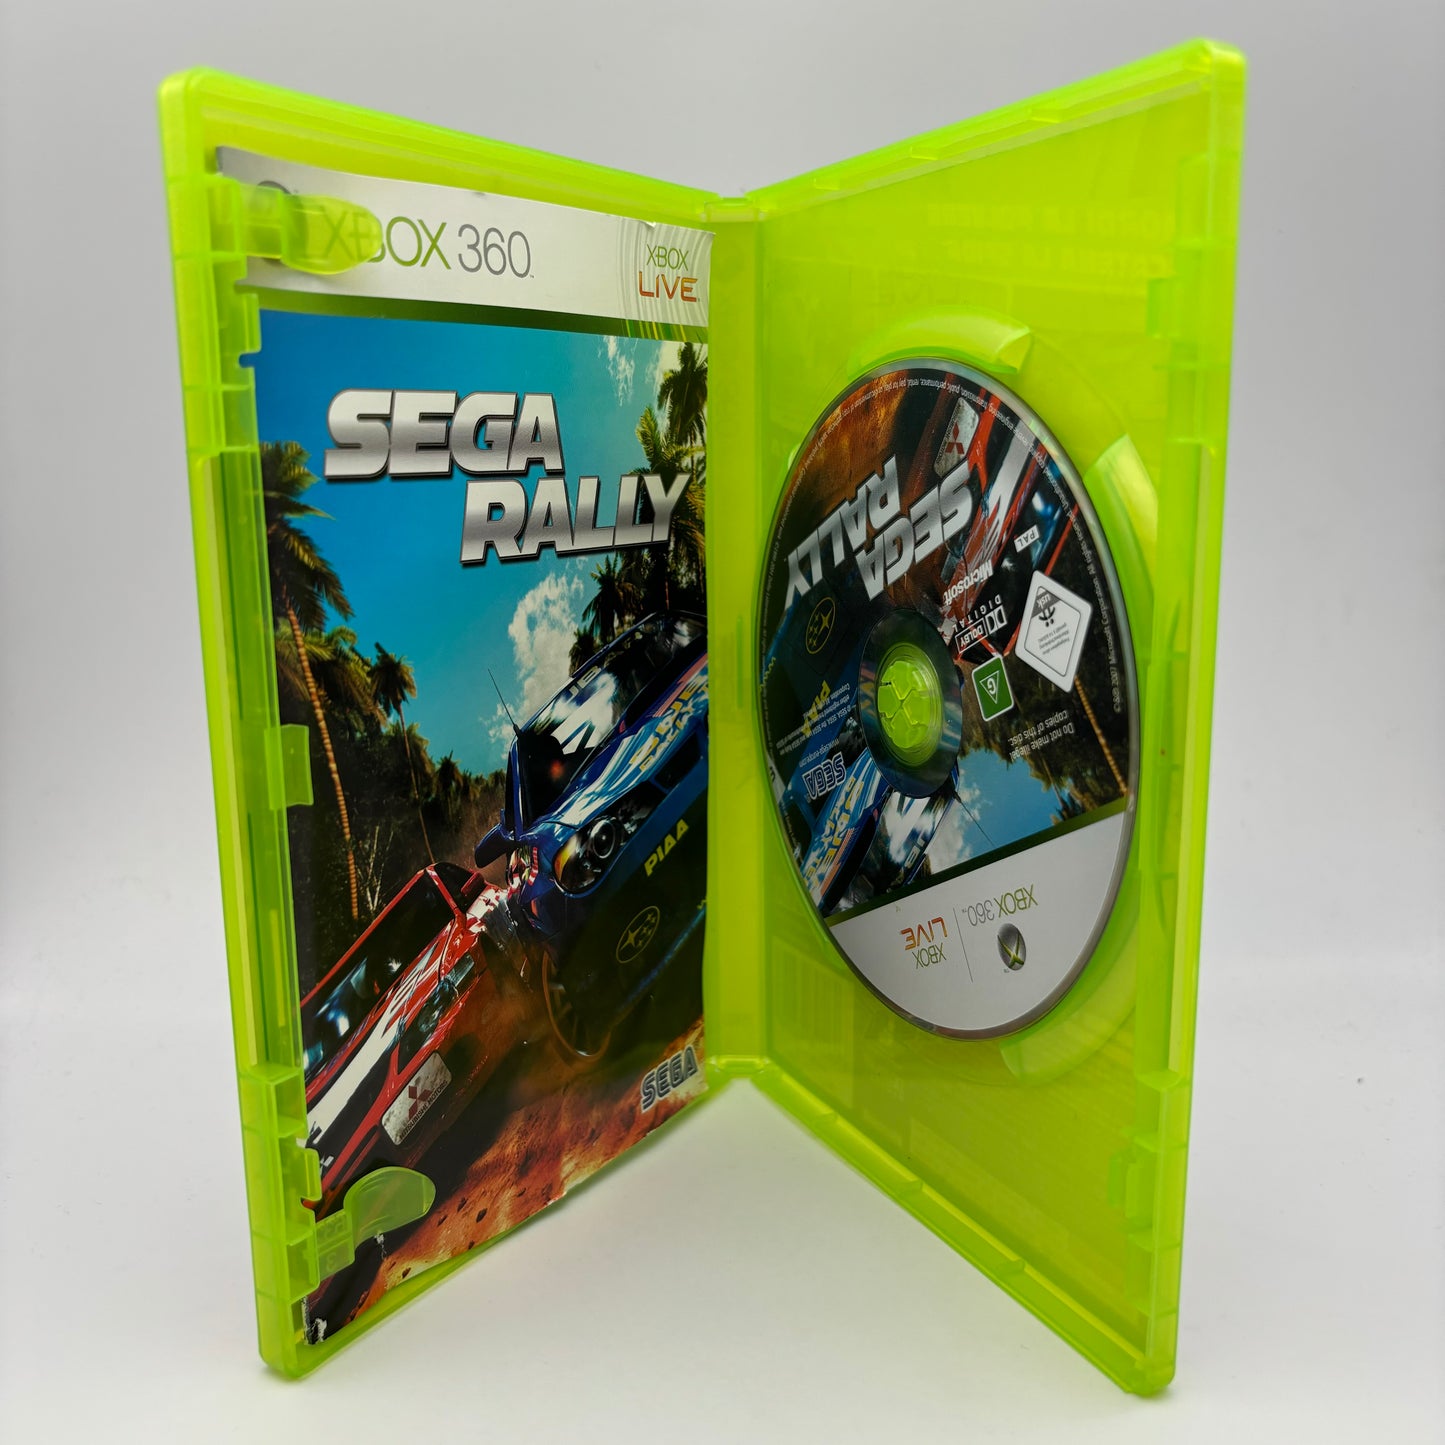 Sega Rally Xbox 360 Pal Ita (USATO)